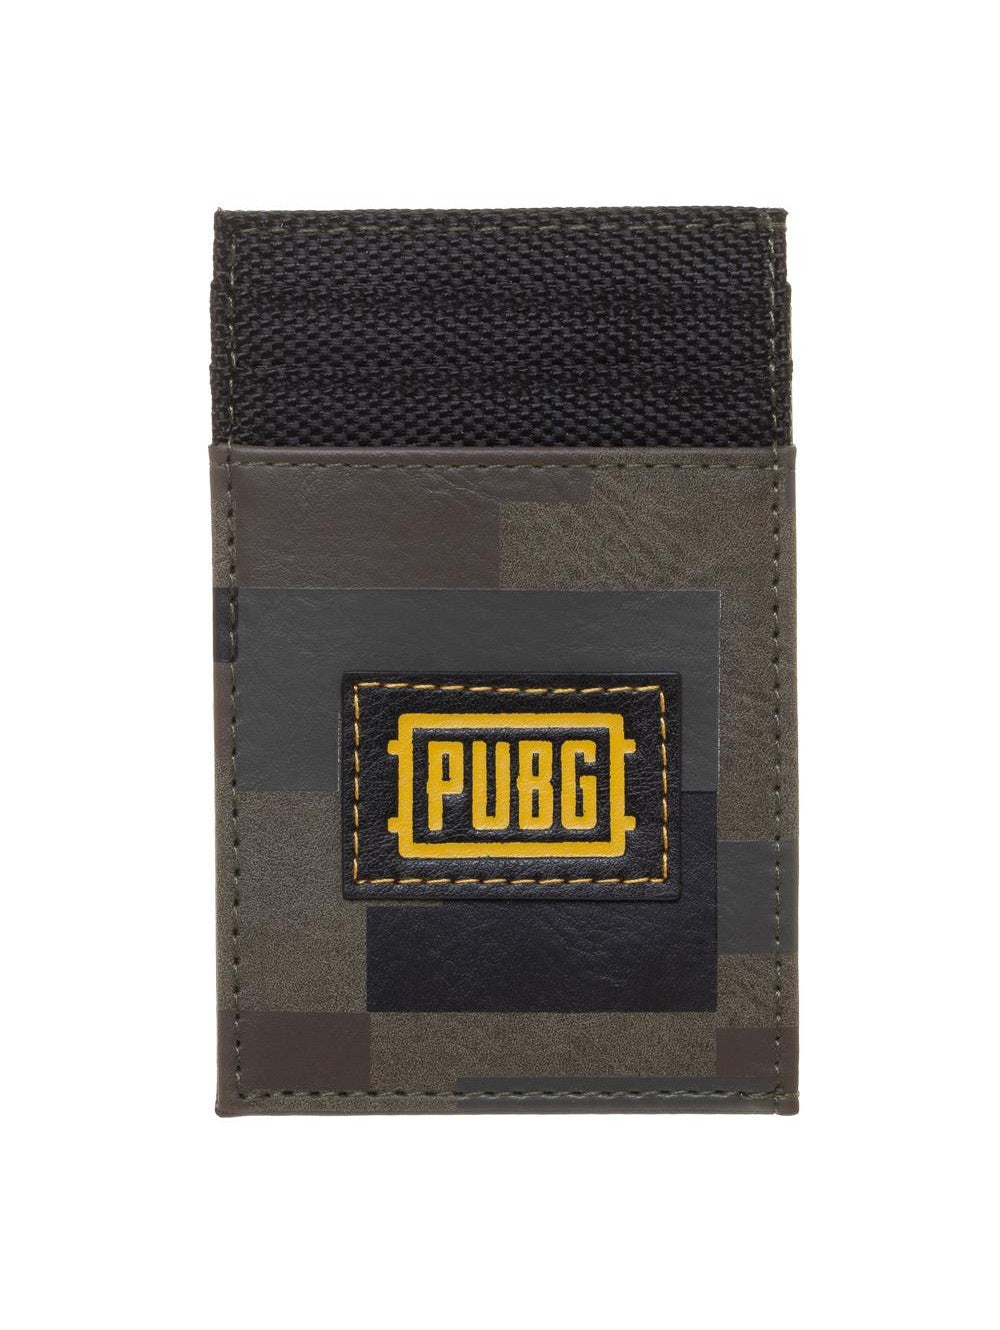 PUBG - Front Pocket Wallet